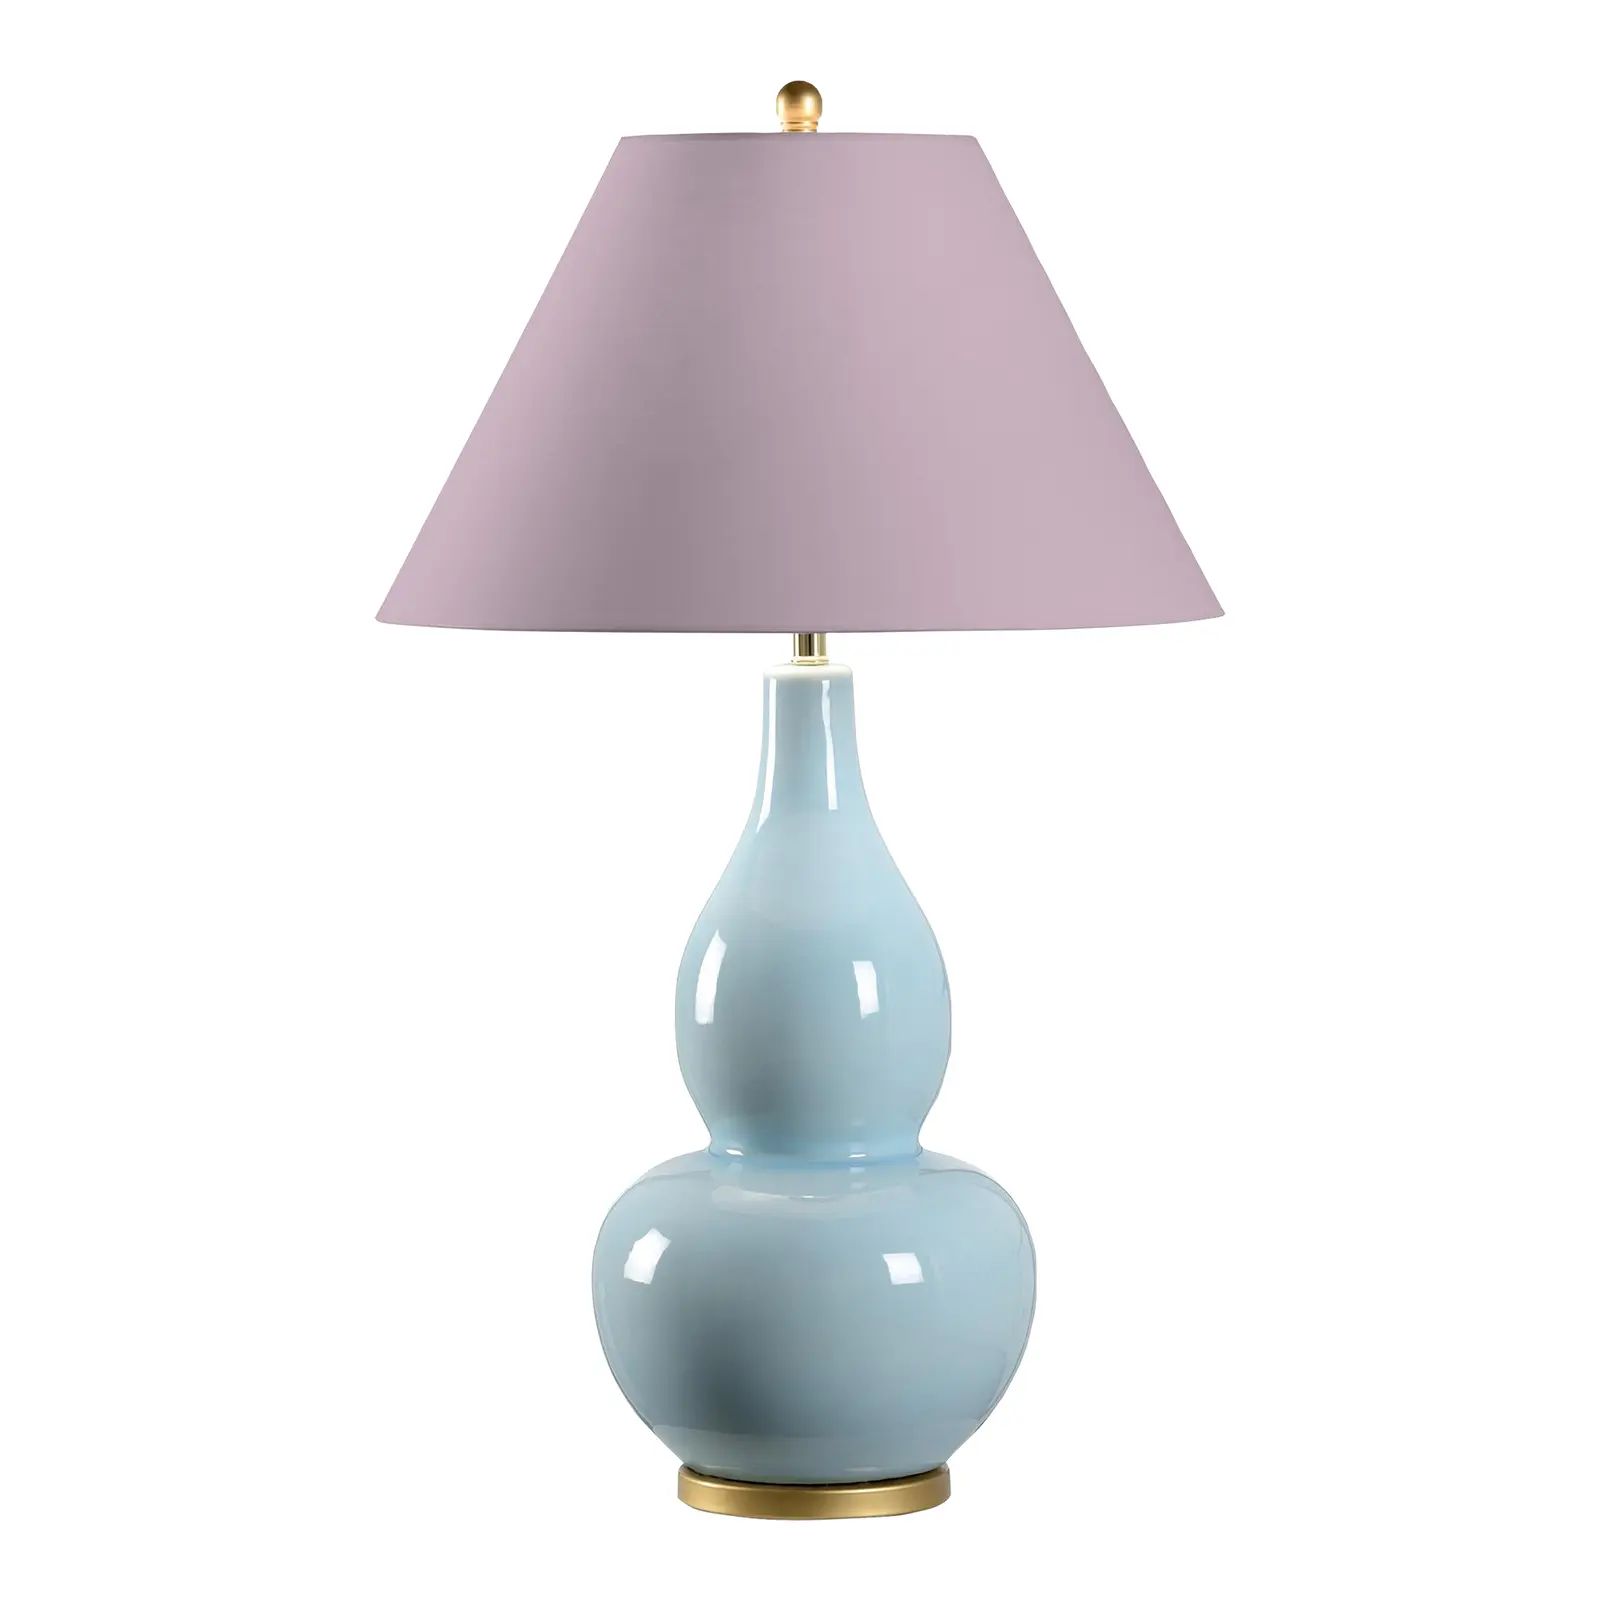 Casa Cosima Large Double Gourd Table Lamp, Light Blue Base with Hidden Sanctuary Lamp Shade | Chairish